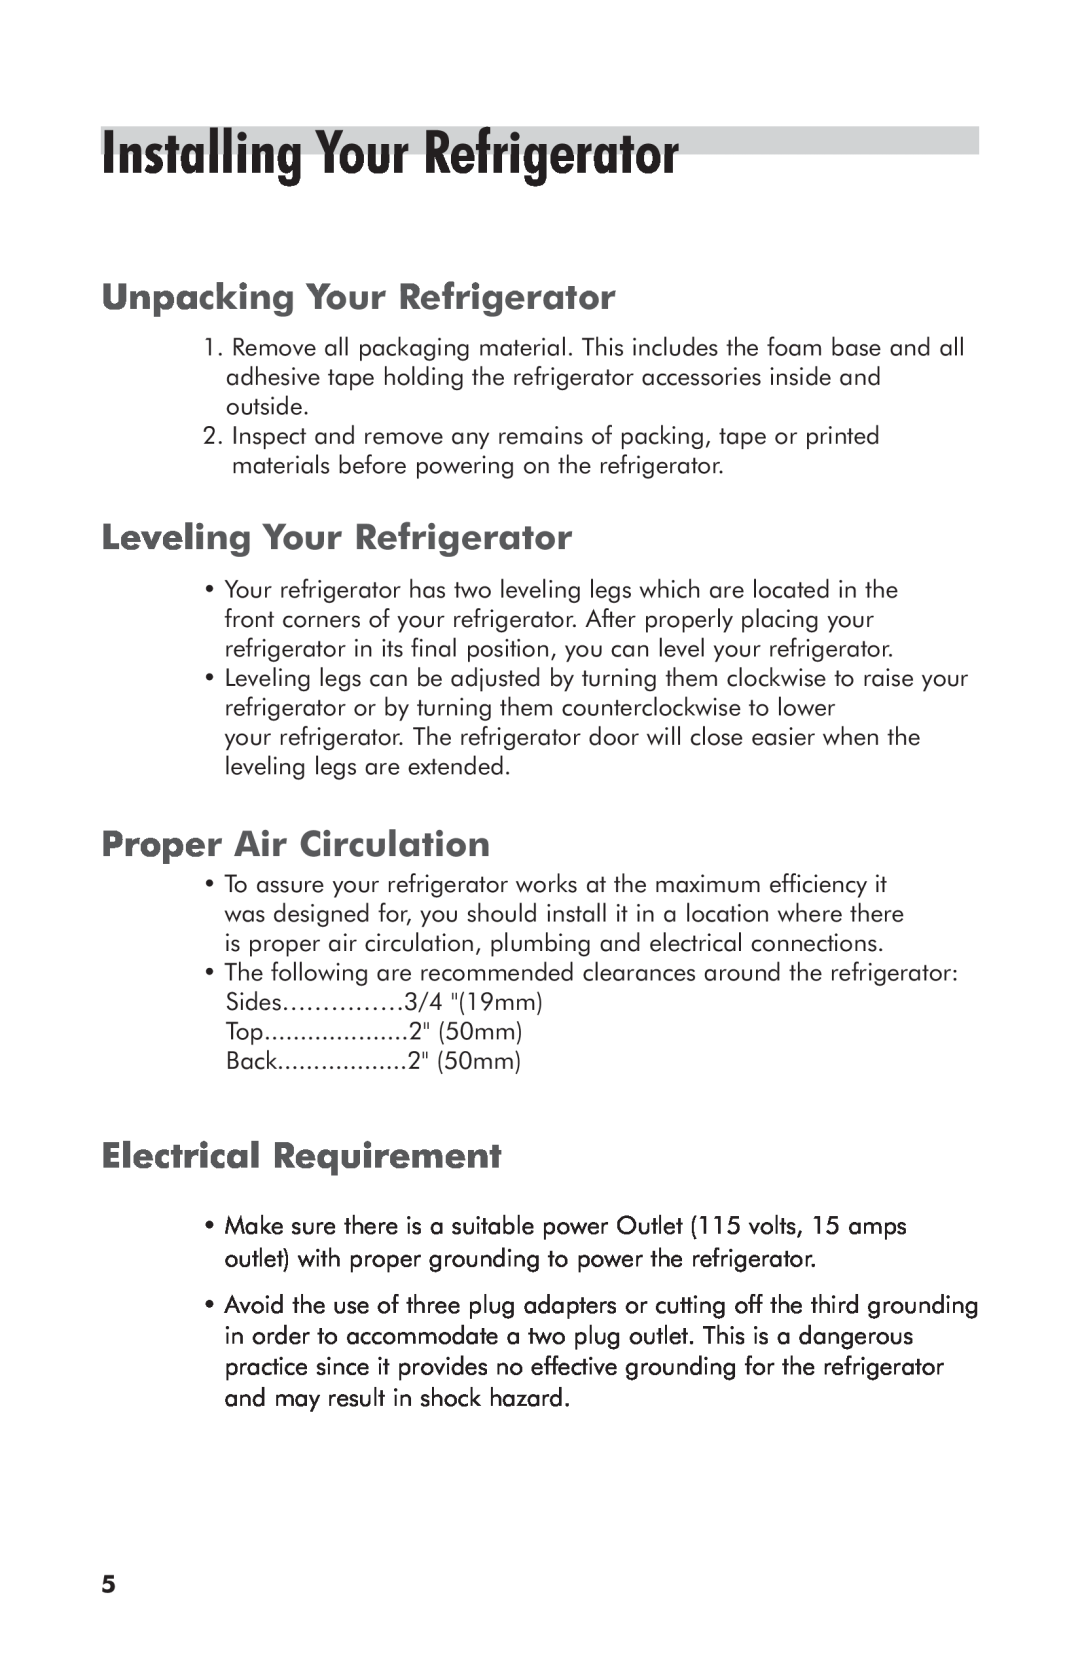 Haier 3590A Installing Your Refrigerator, Unpacking Your Refrigerator, Leveling Your Refrigerator, Proper Air Circulation 